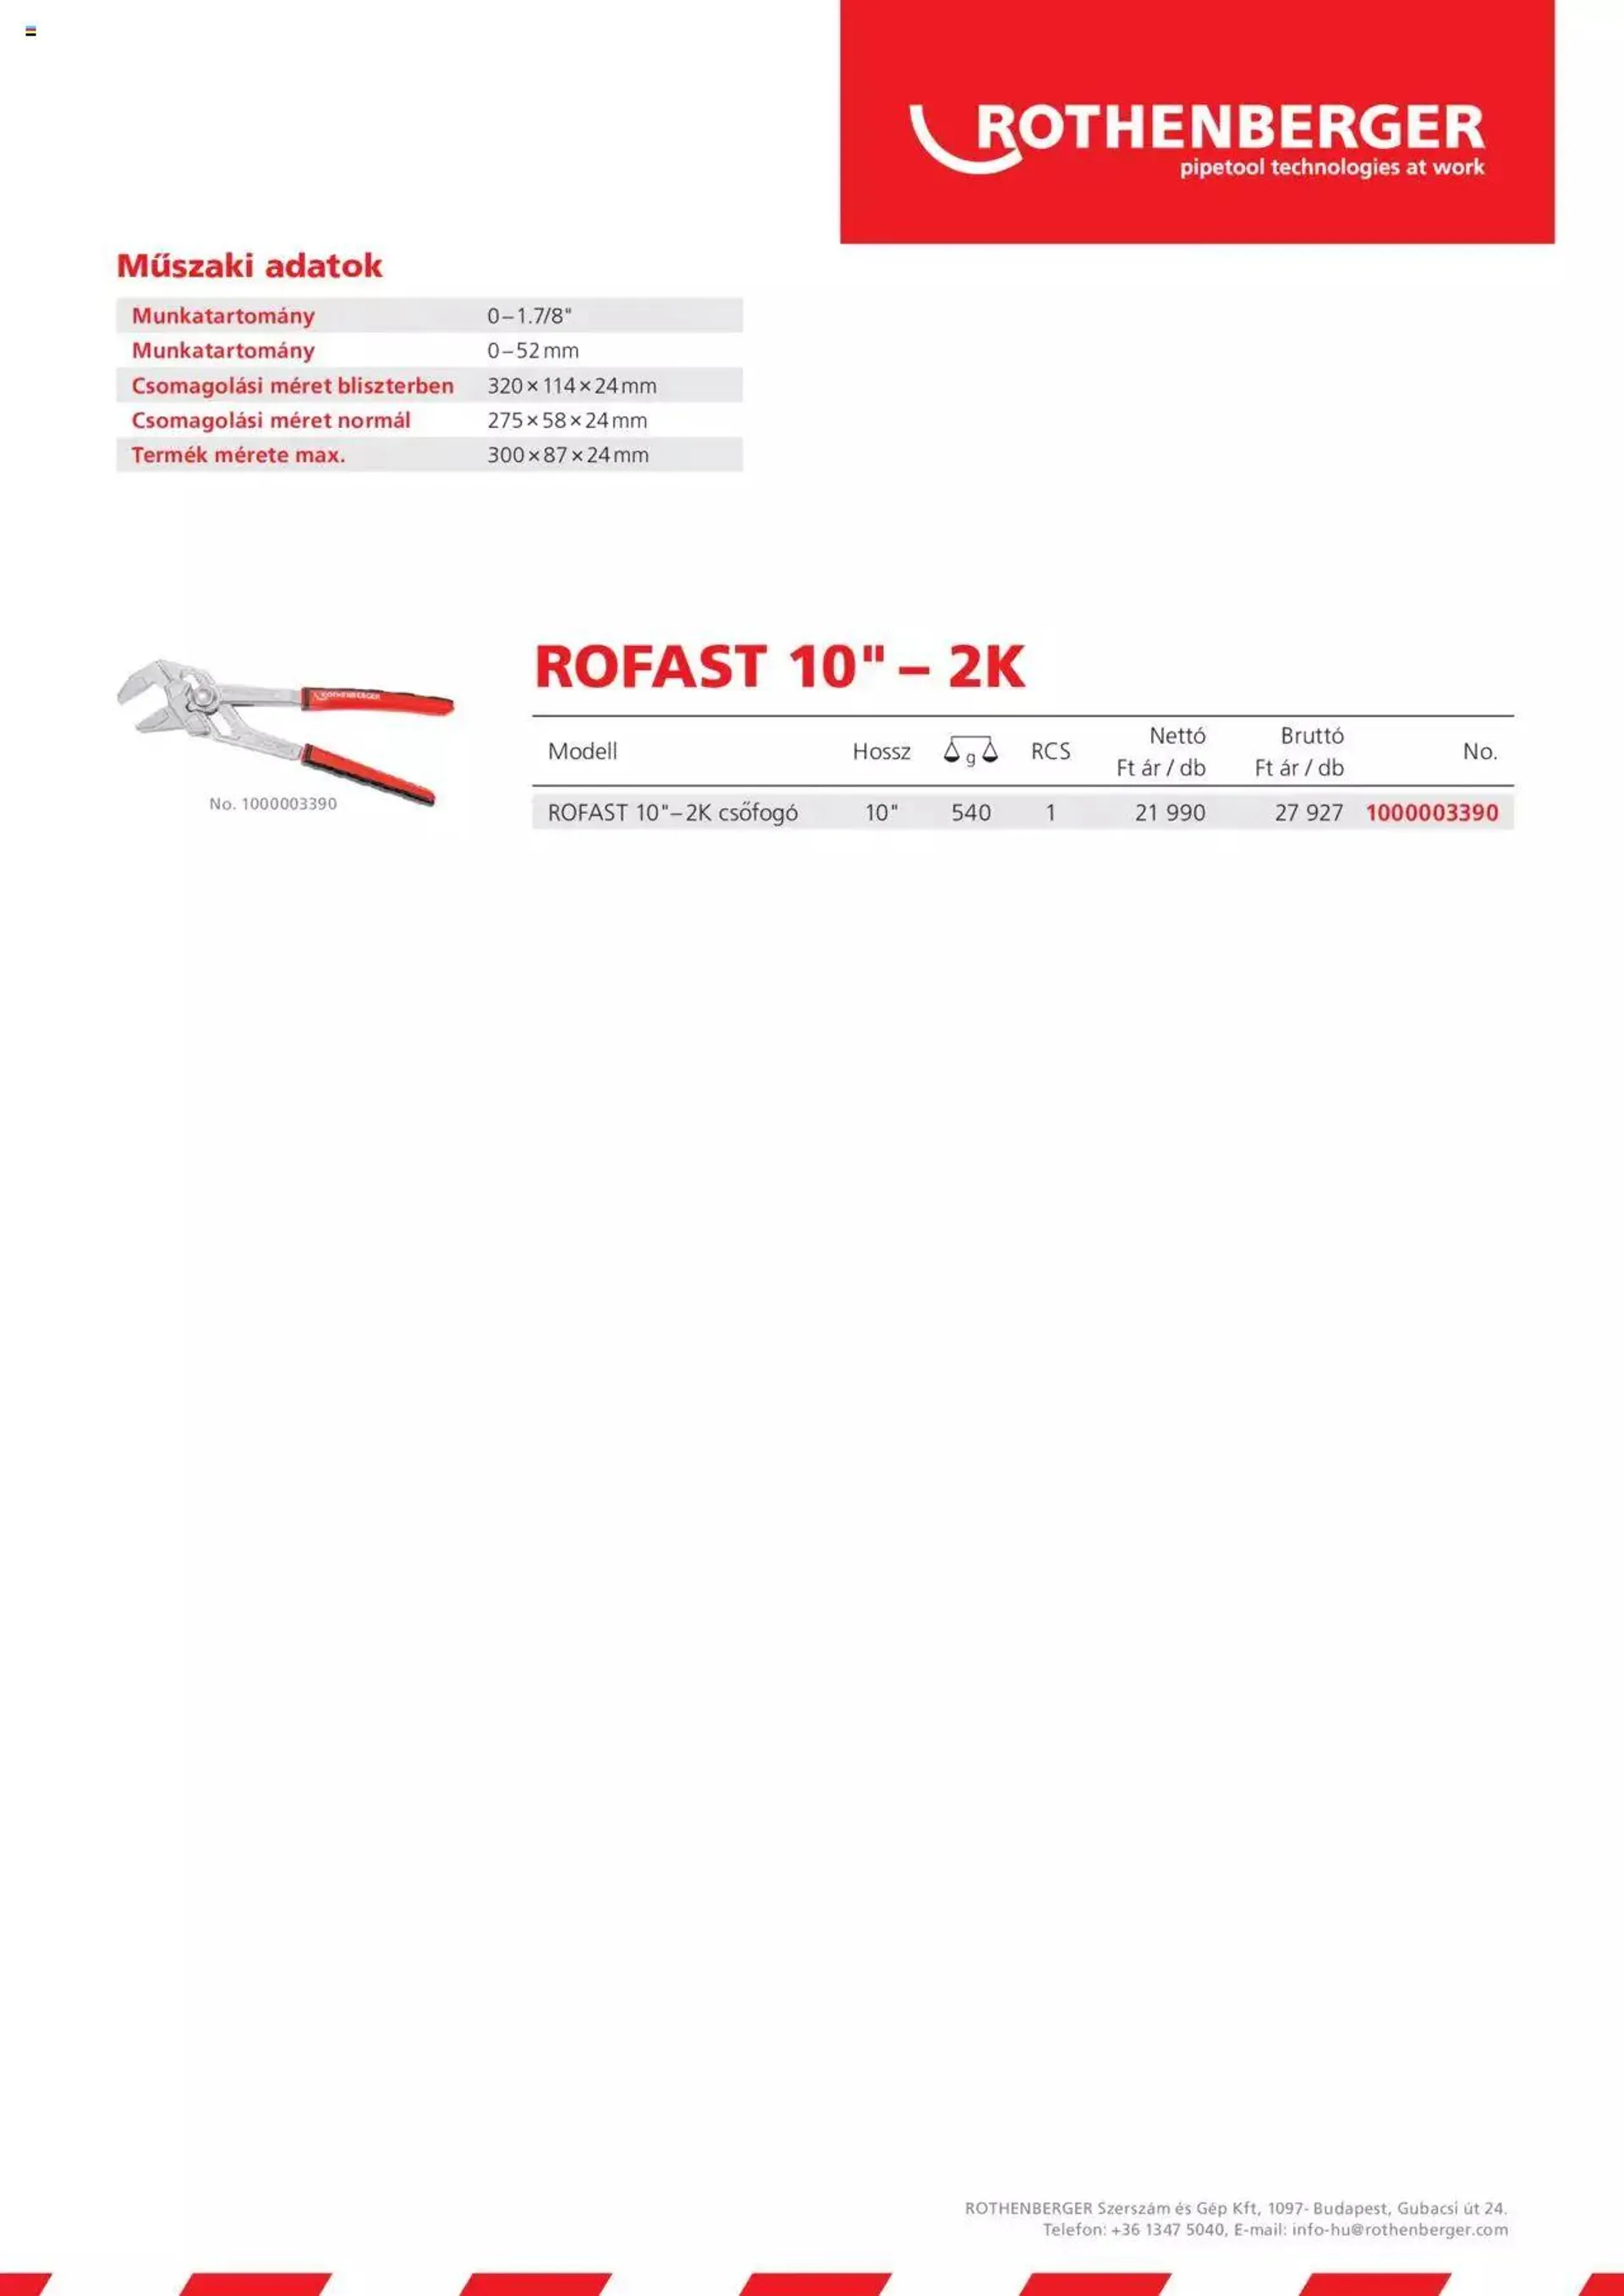 Rothenberger - Rofast 10" - 2K - 1